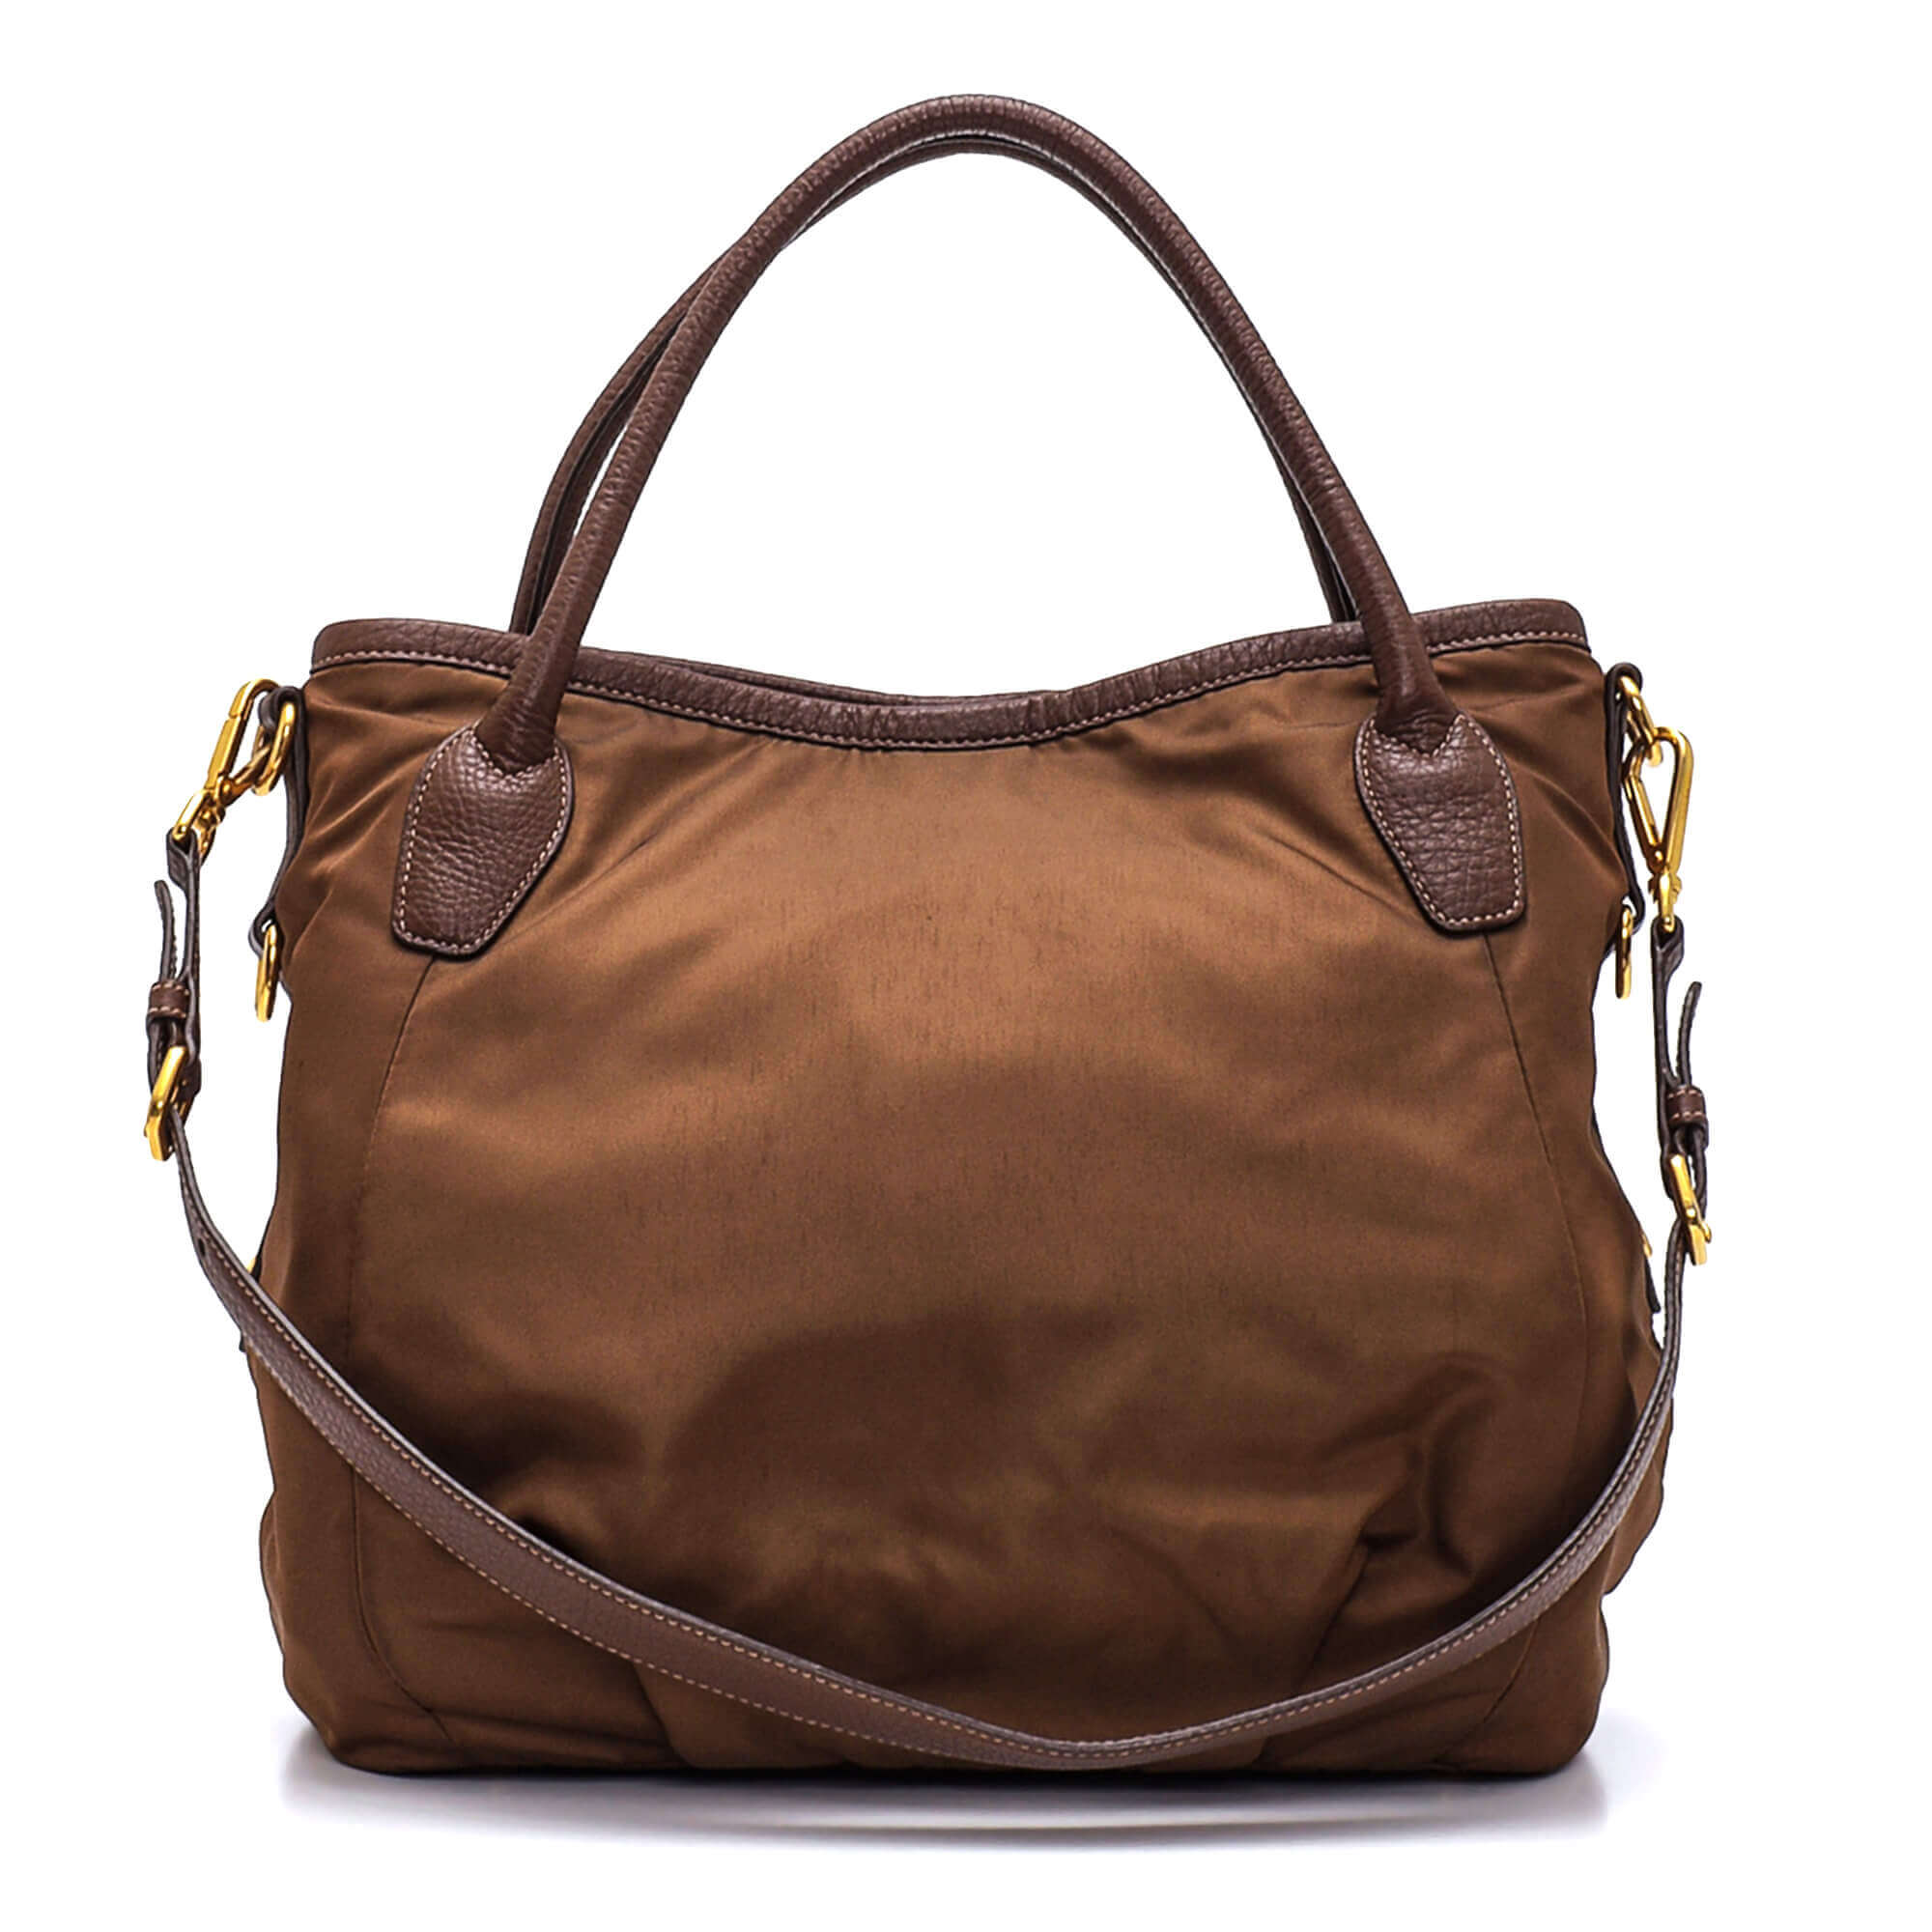 Prada - Brown Nylon Leather Strap and Tag Tote Bag